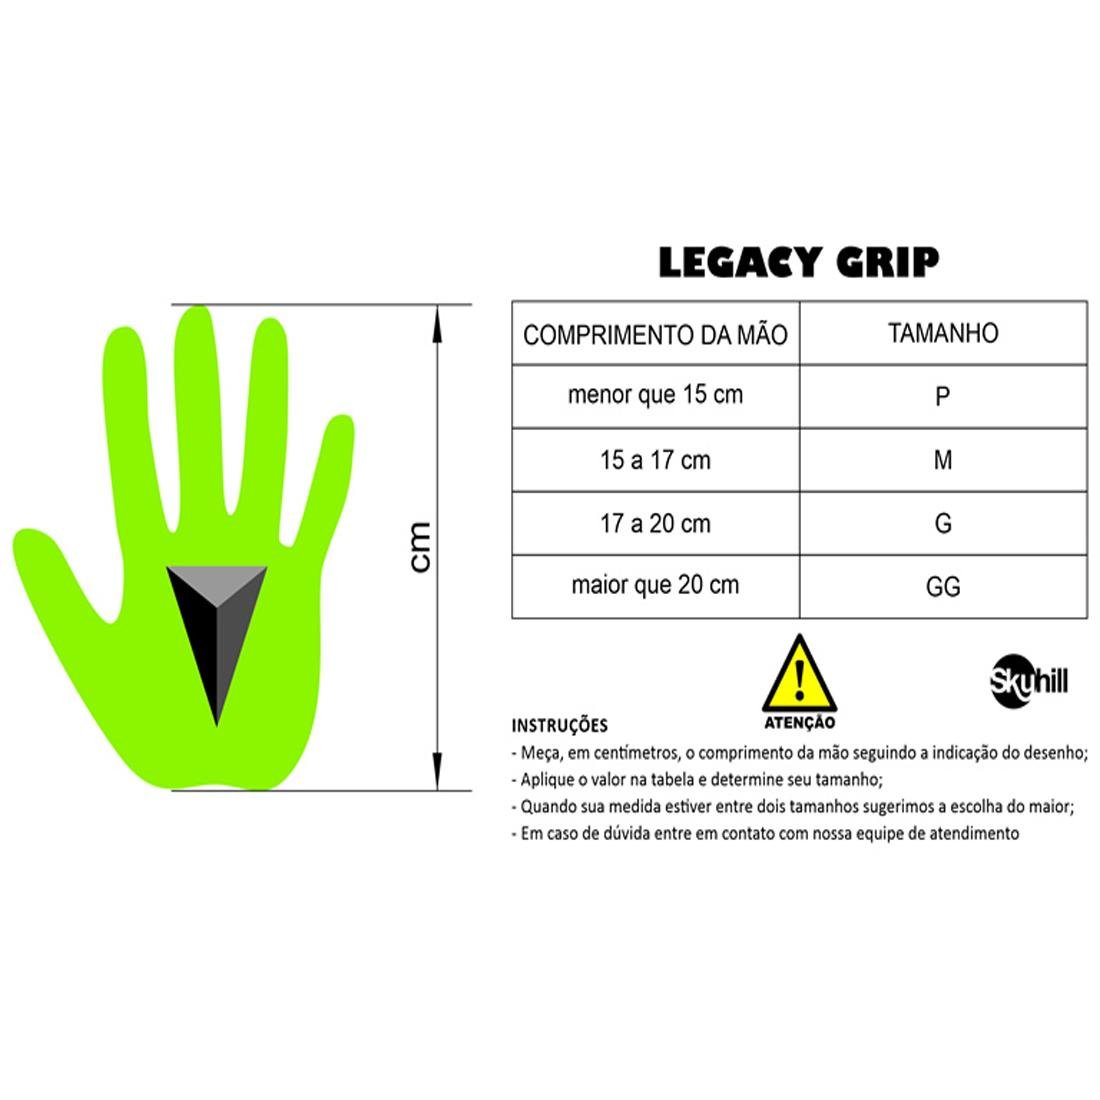 Hand Grip Legacy Power Colors Neopreme Skyhill - Laranja - M